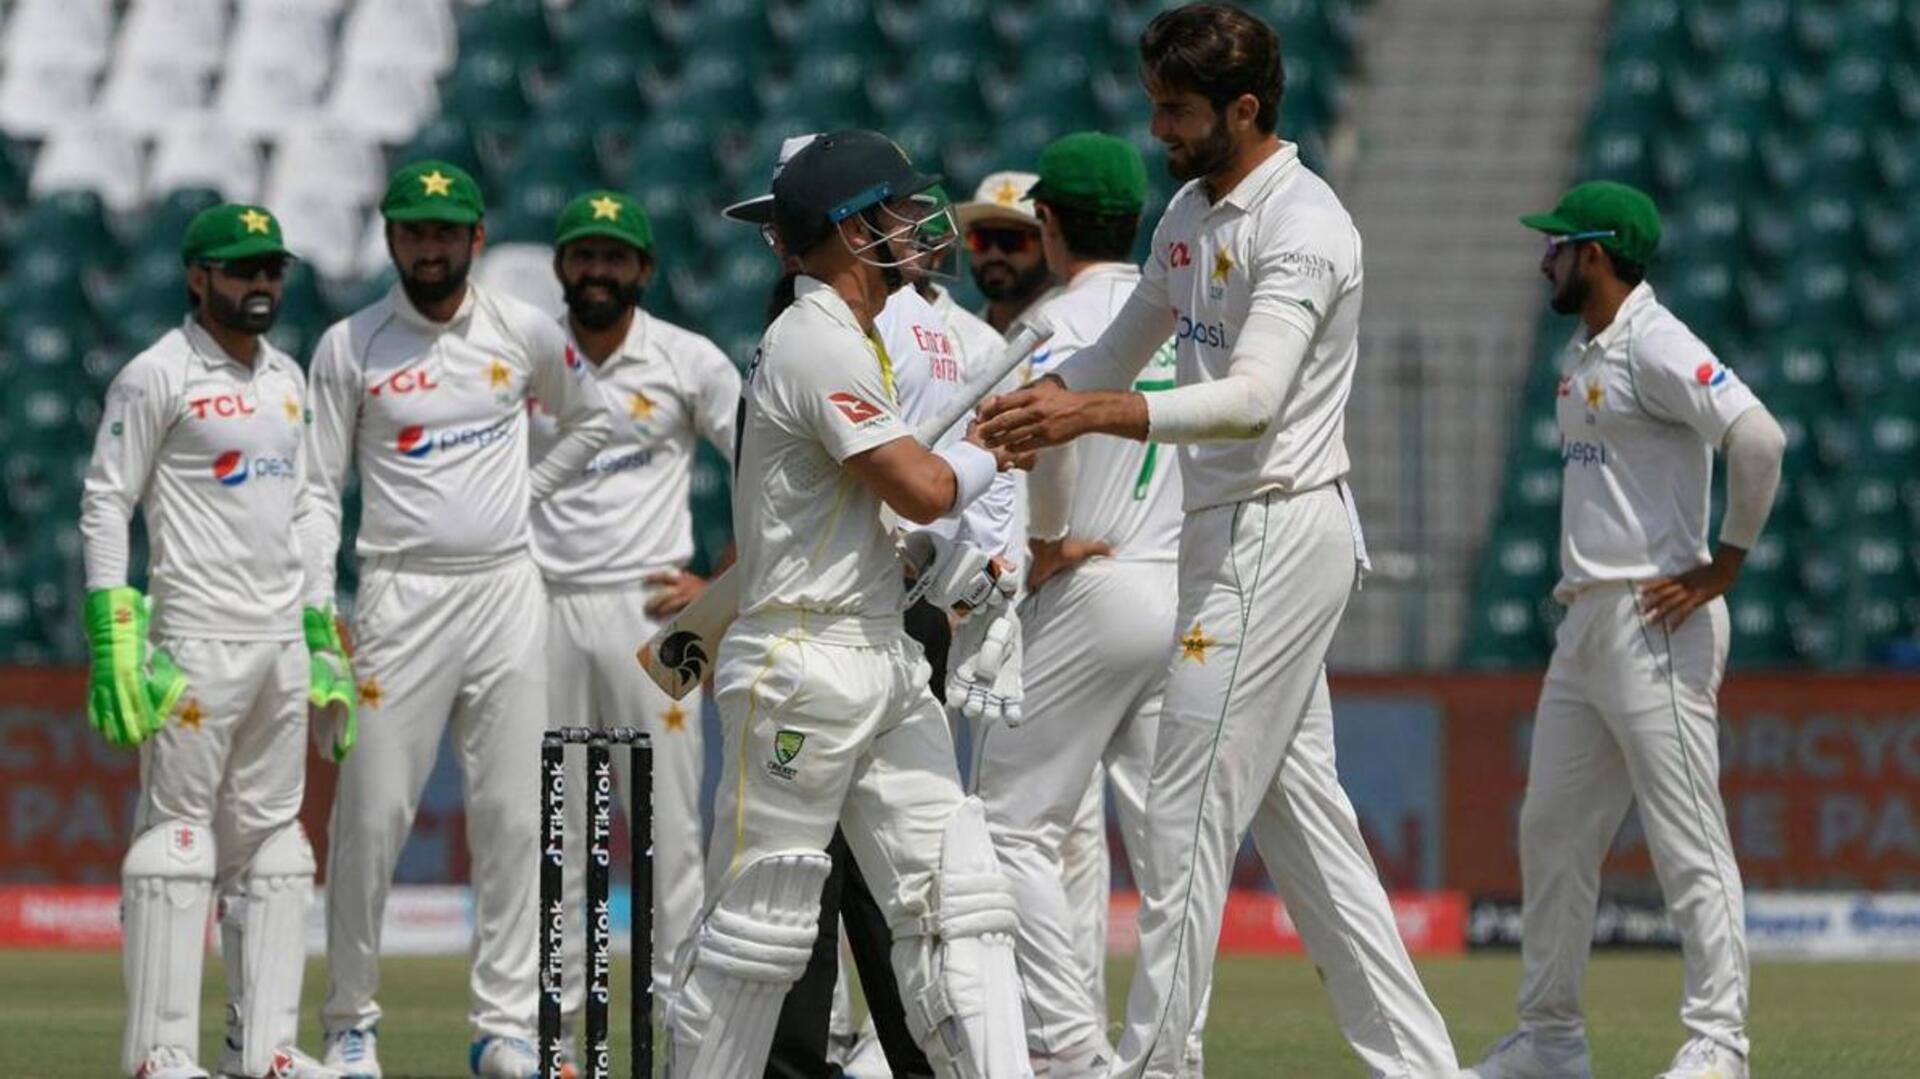 Australia vs Pakistan, 1st Test: Key player battles